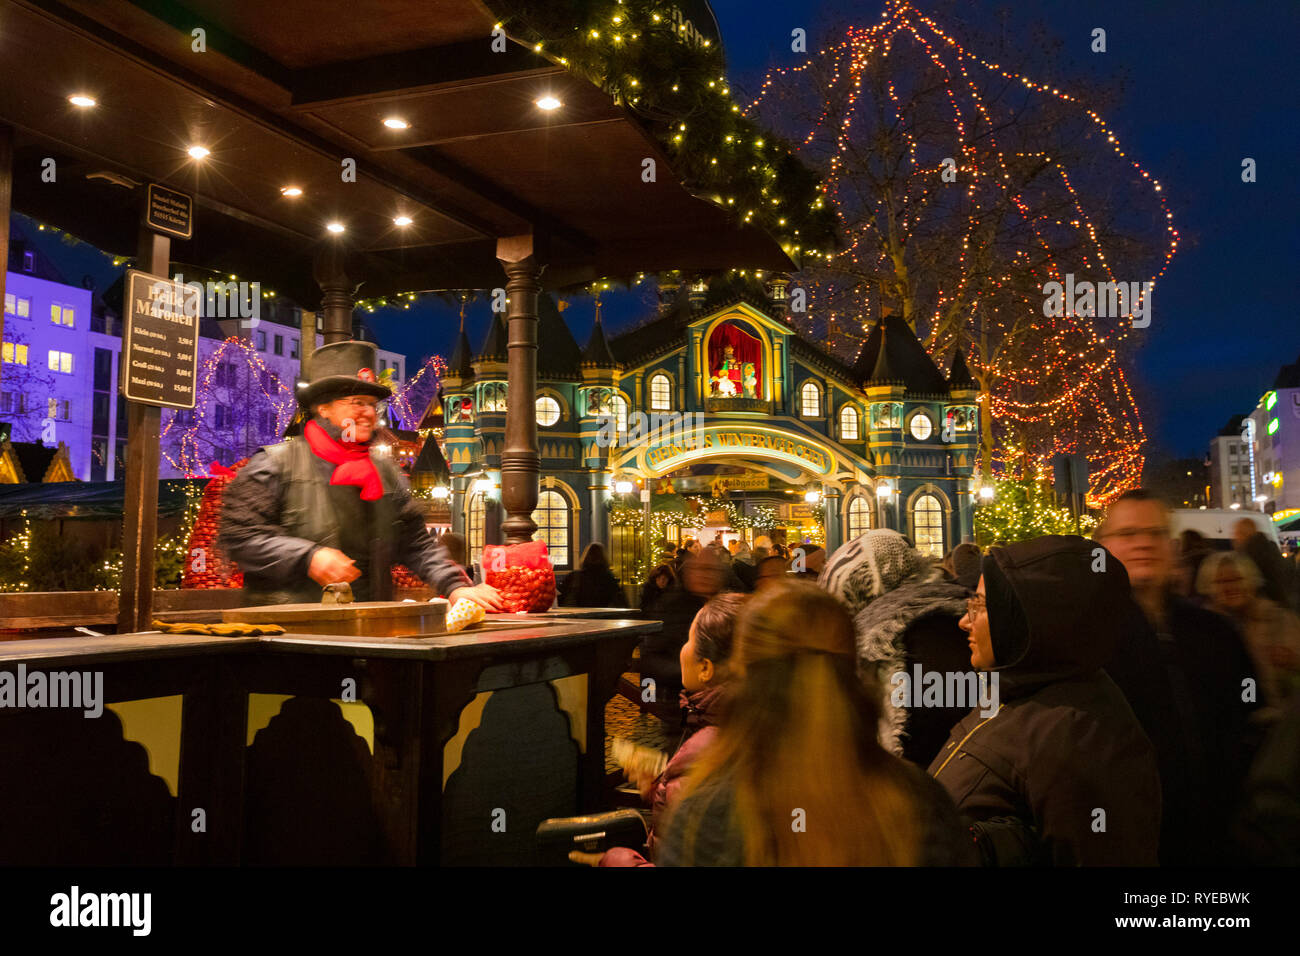 Roasted Chestnut Vendor, Cologne Christmas Market, Cologne, Germany, Europe Stock Photo